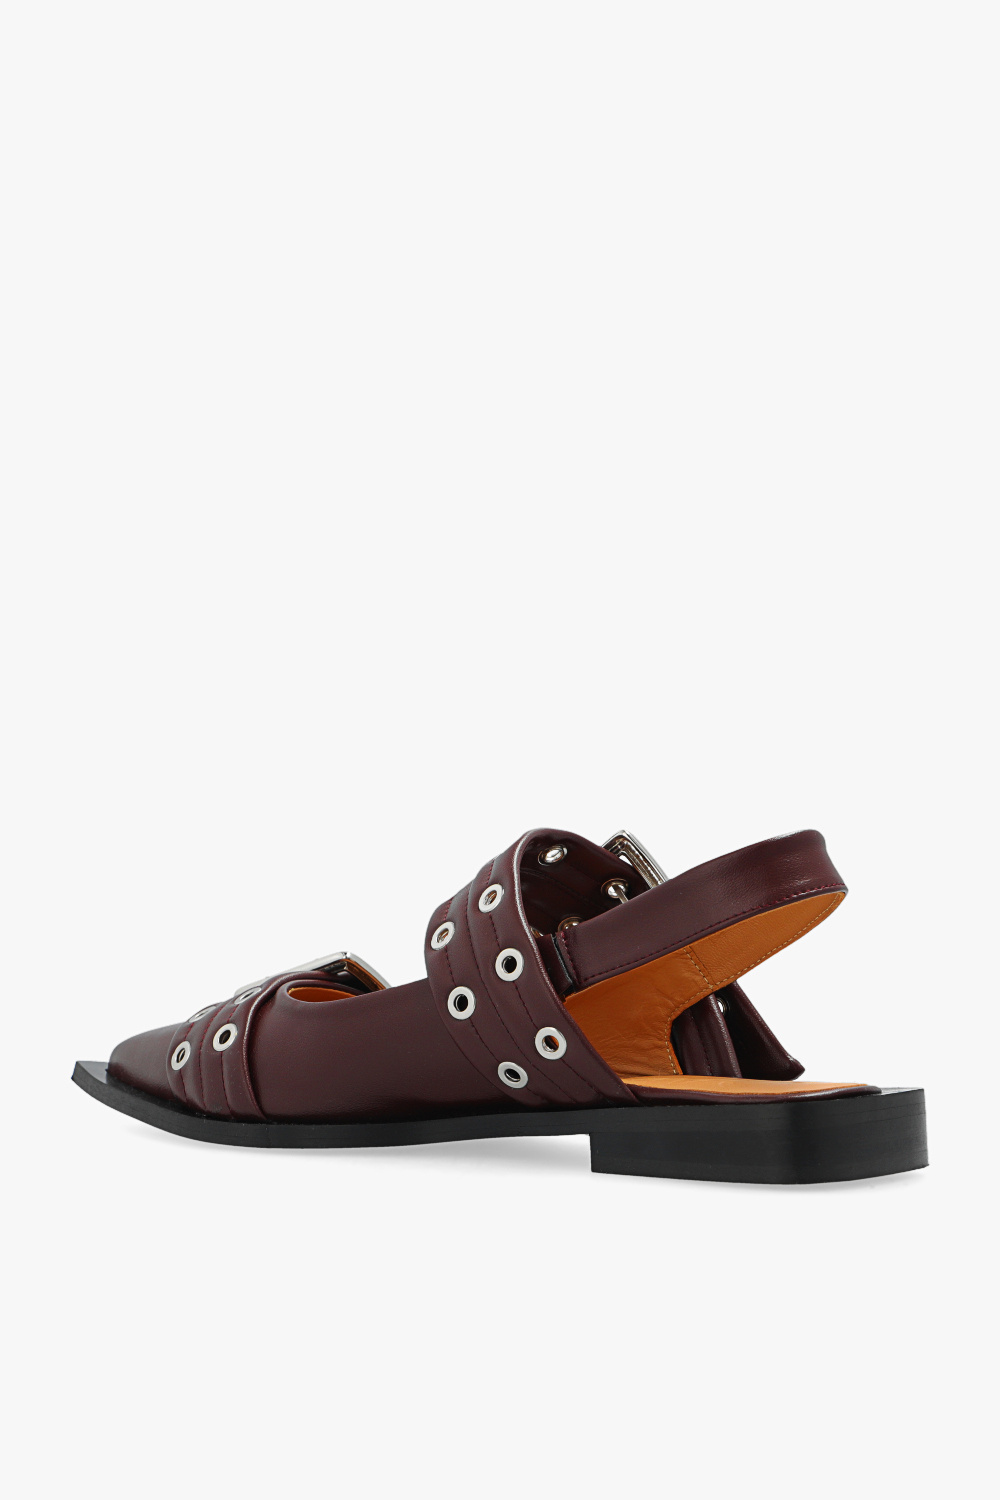 Ganni Leather Heel shoes